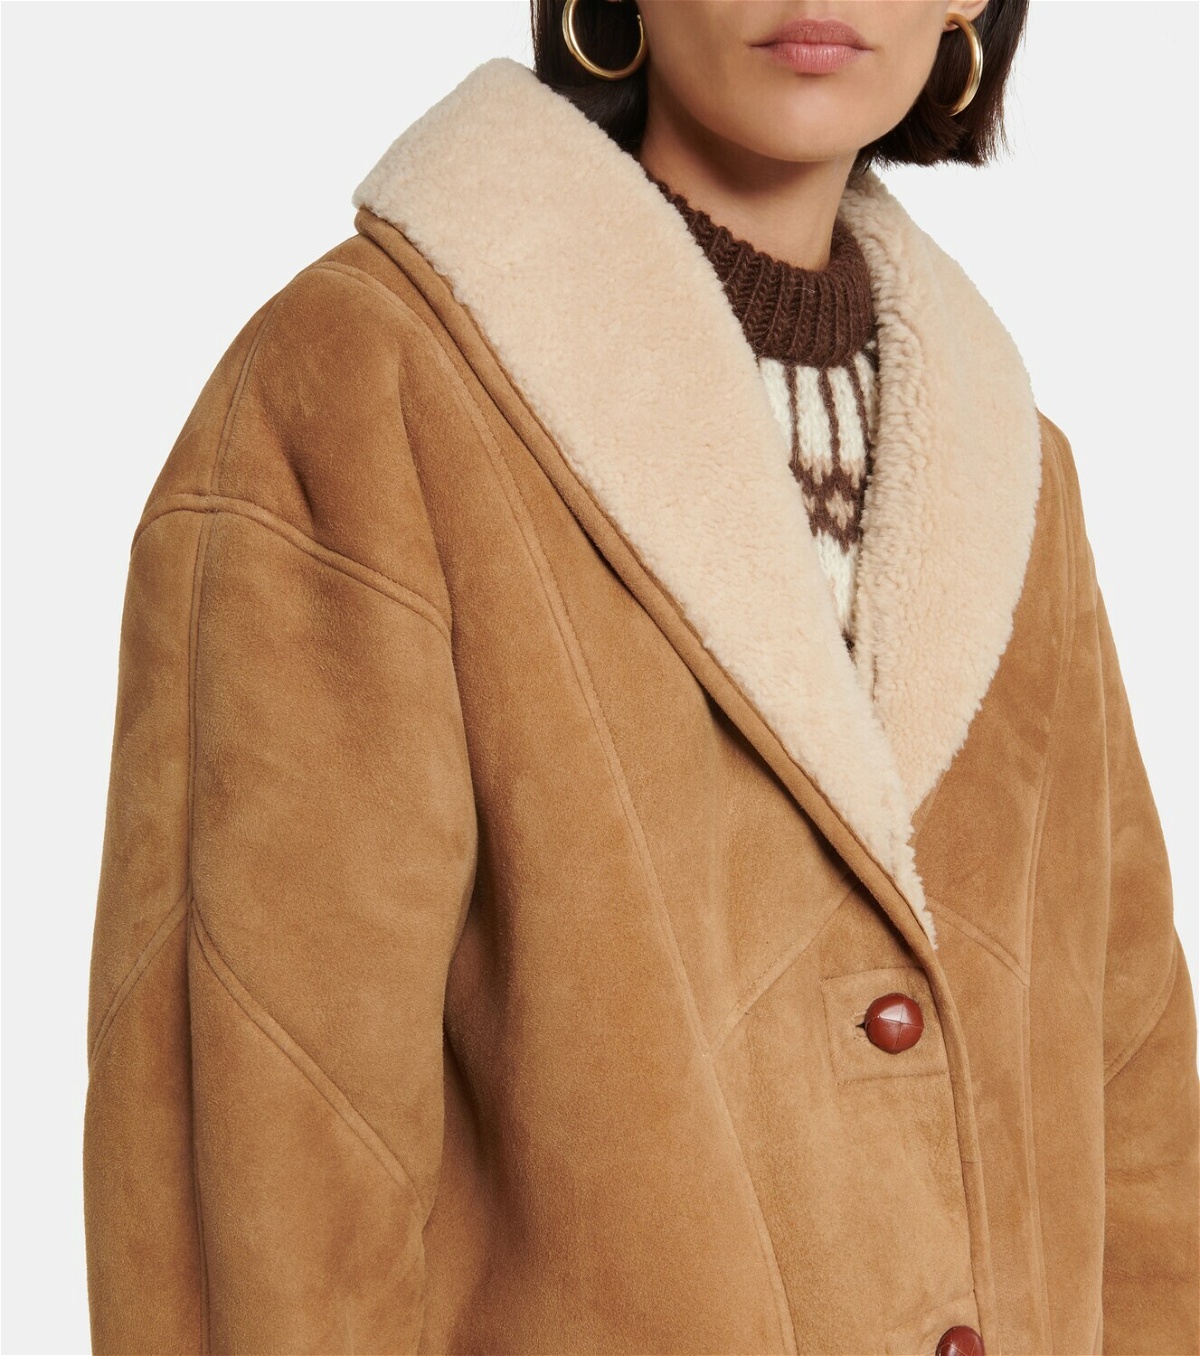 Blazé Milano Tatoosh shearling-lined suede jacket